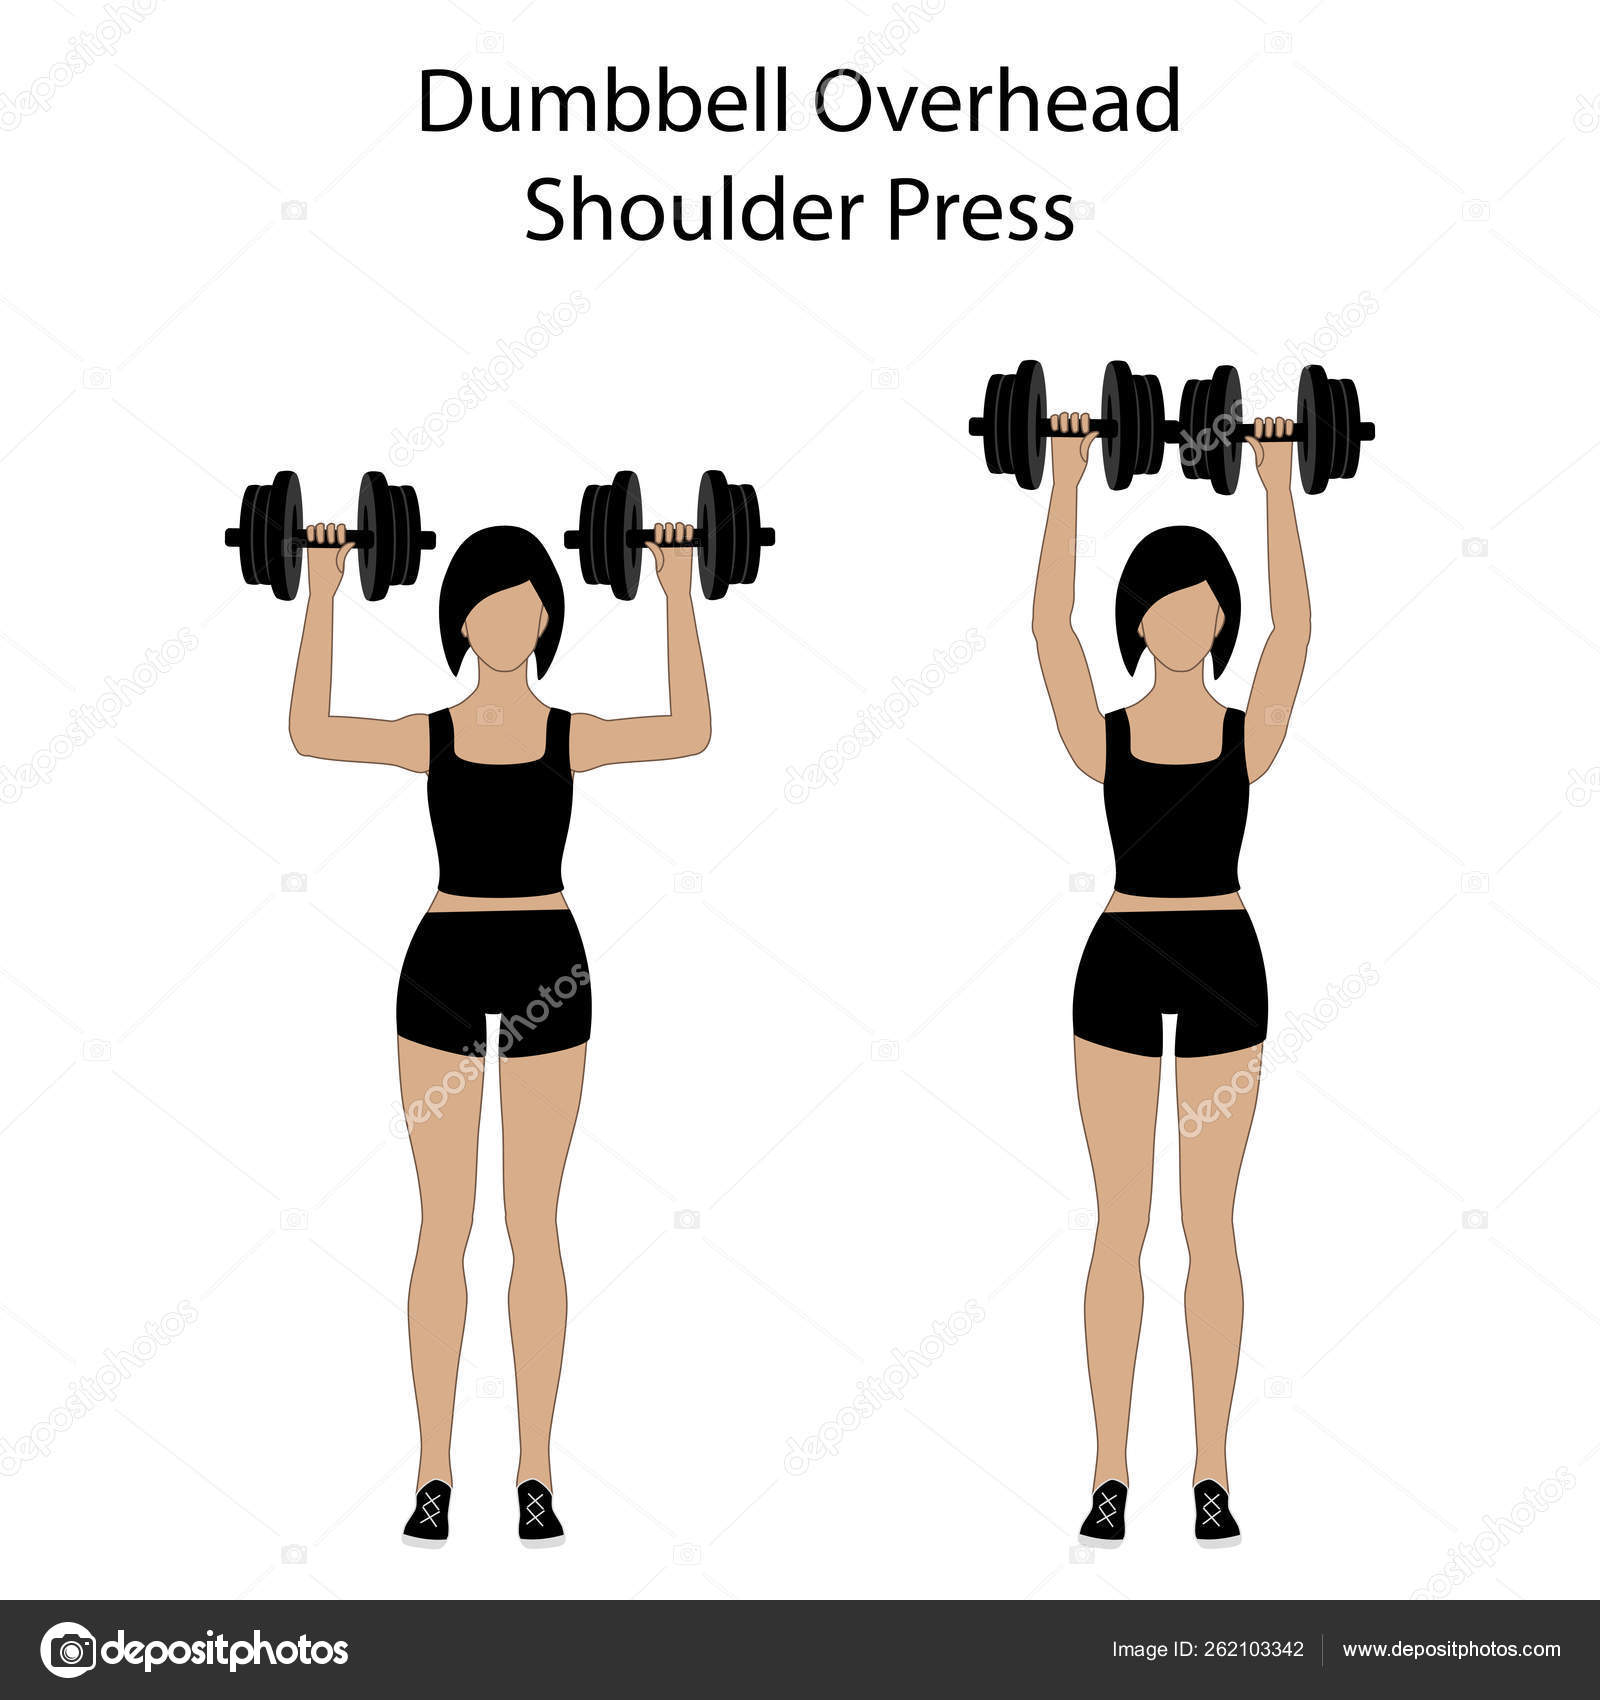 Dumbbell Overhead Shoulder Press Exercise Vector Image By C Parkheta Gmail Com Vector Stock